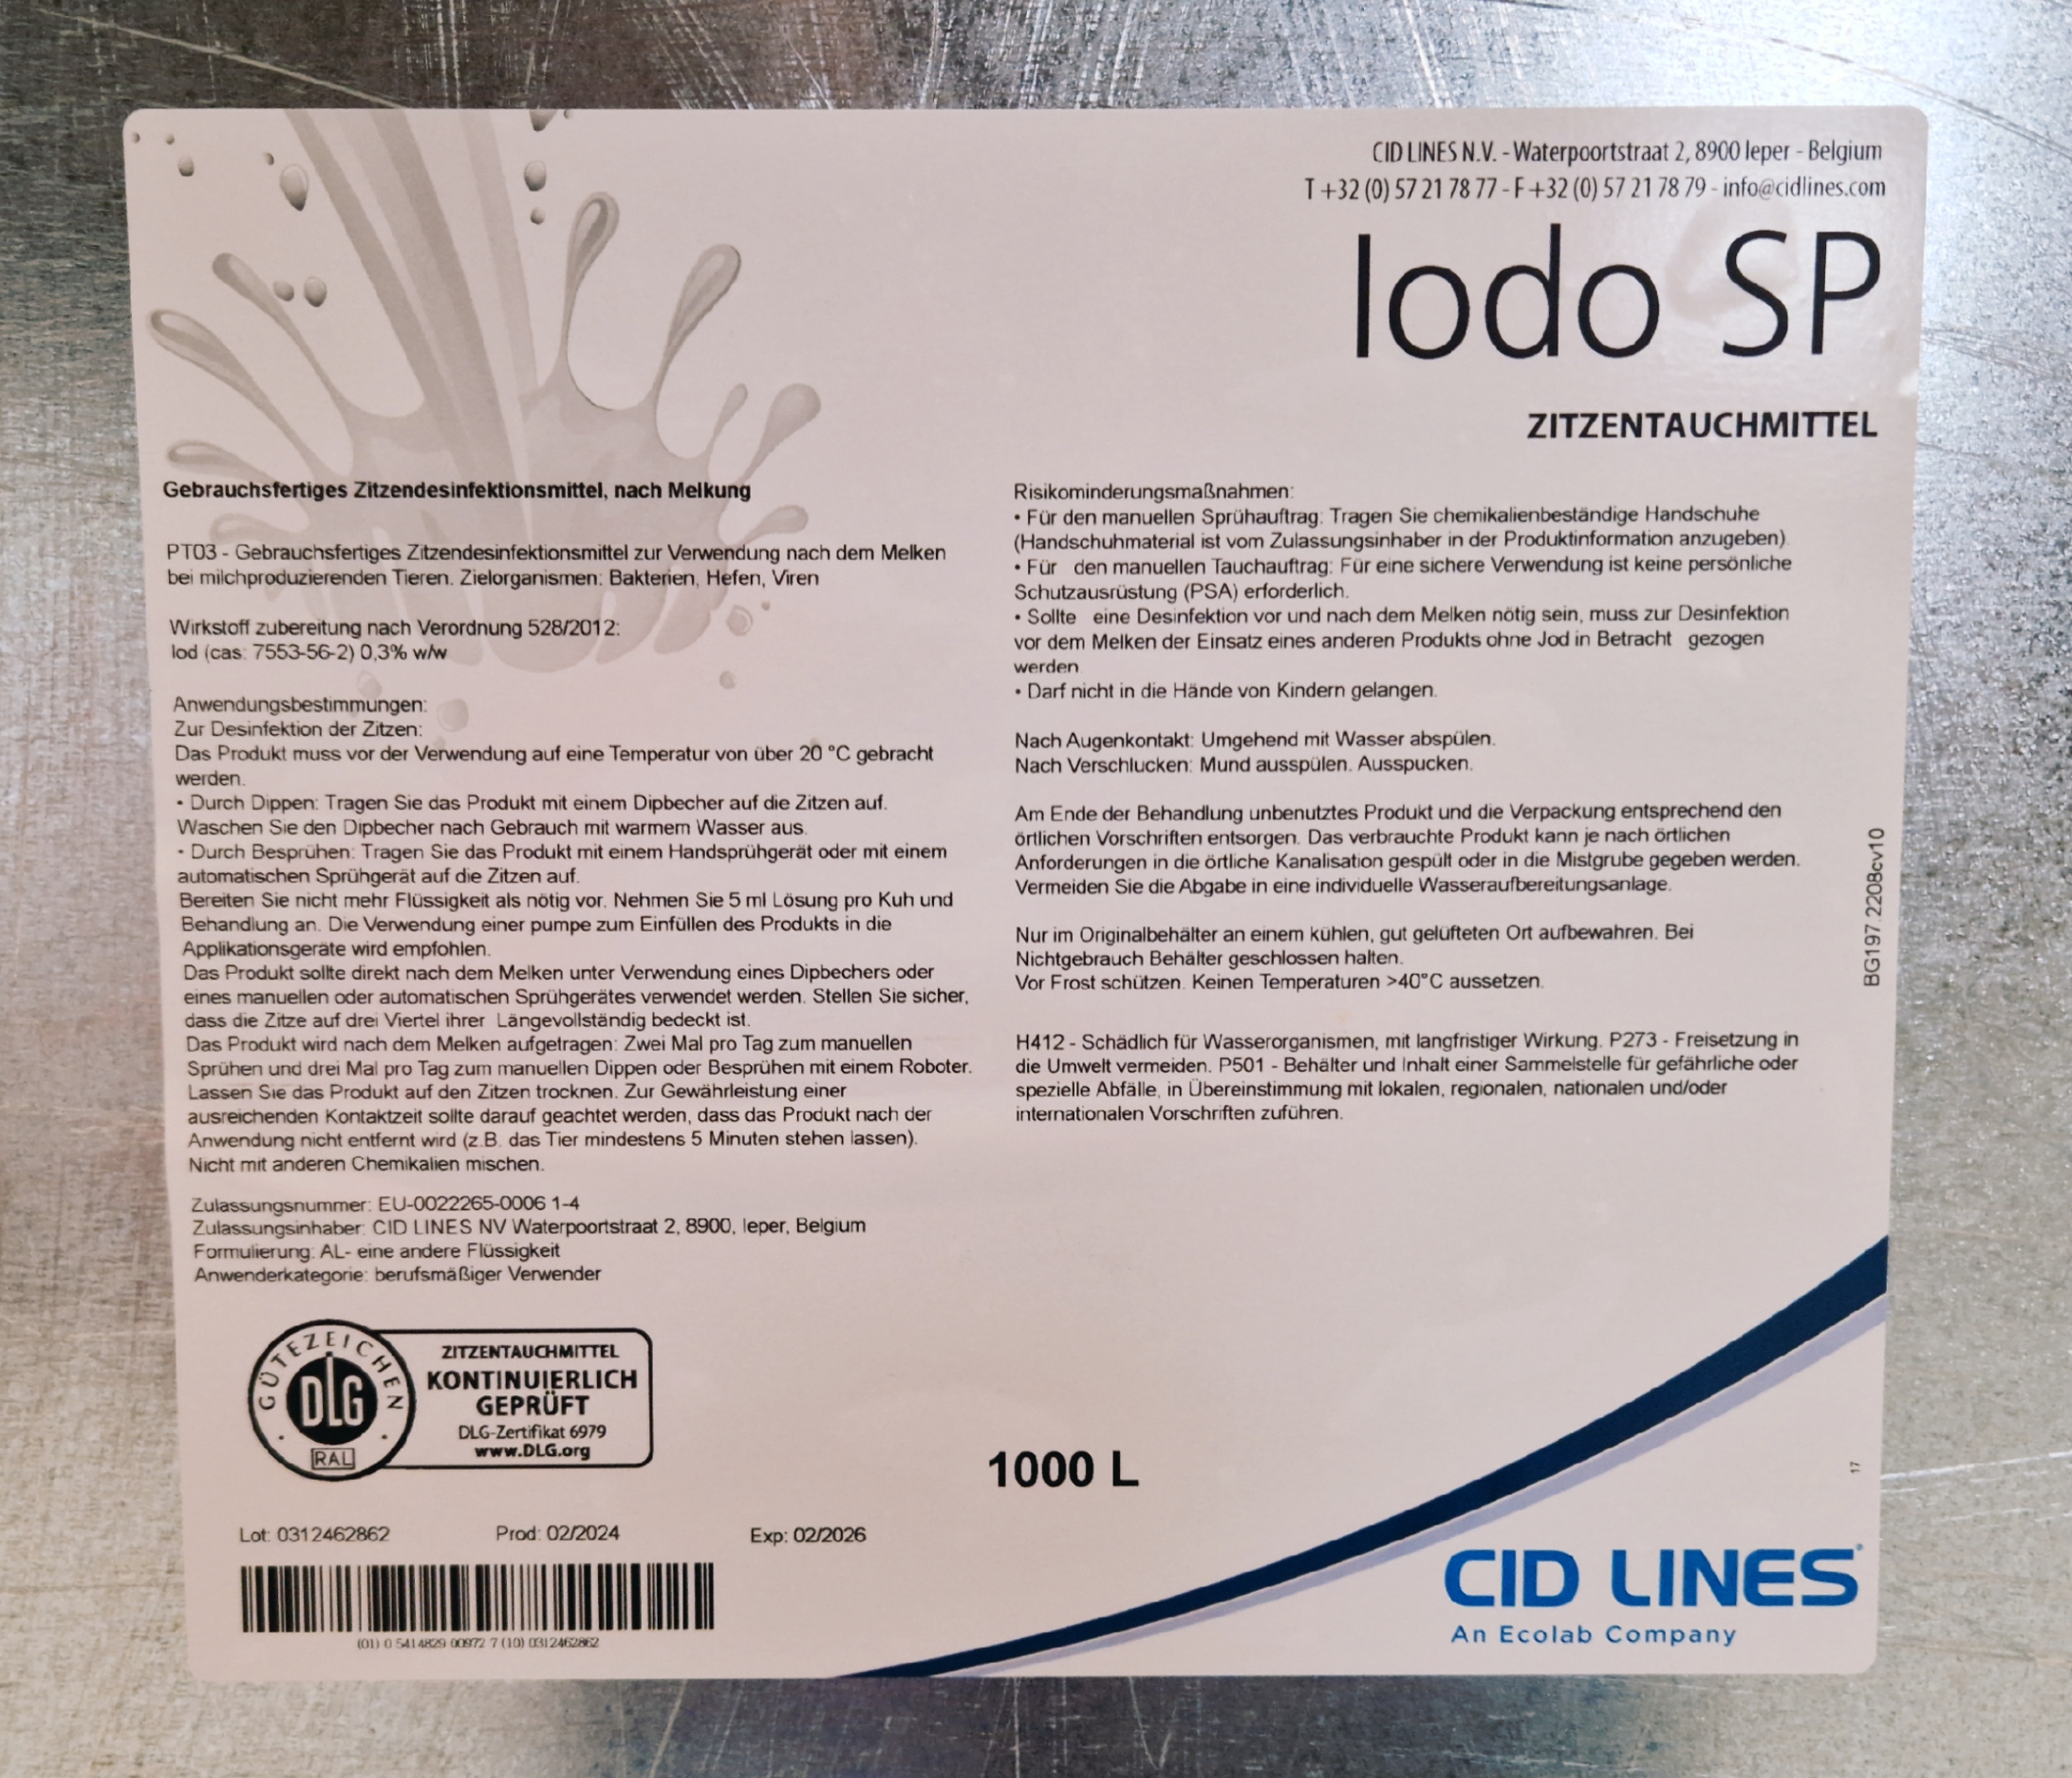 Cid Lines IODO SP 1000kg IBC Zitzendippmittel